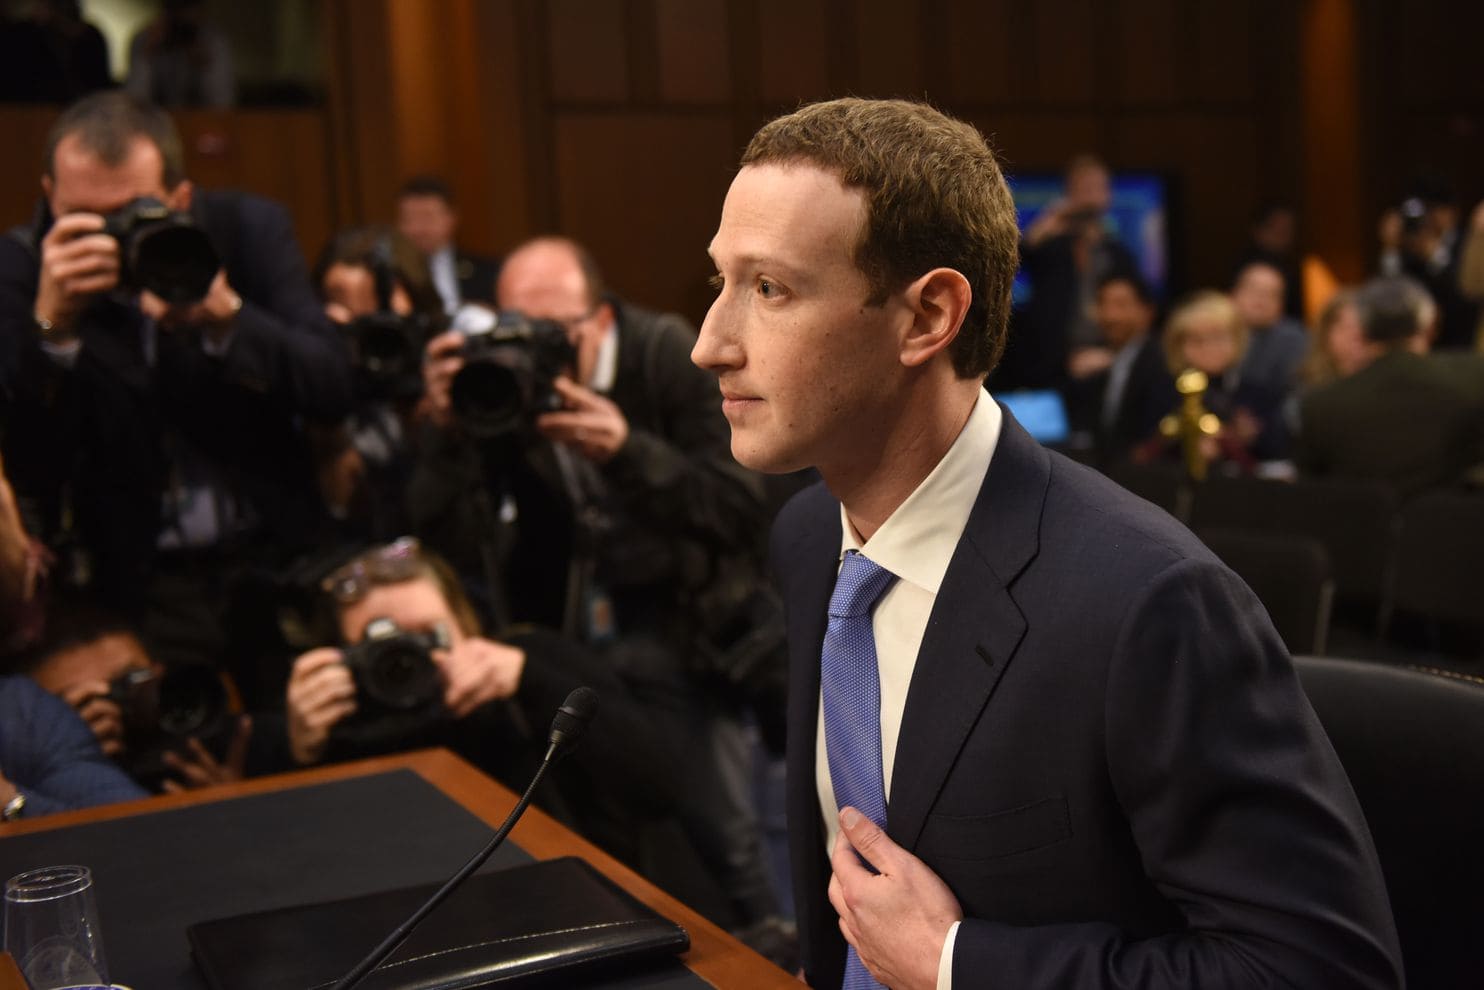 Zuckerberg apologizes at hearing